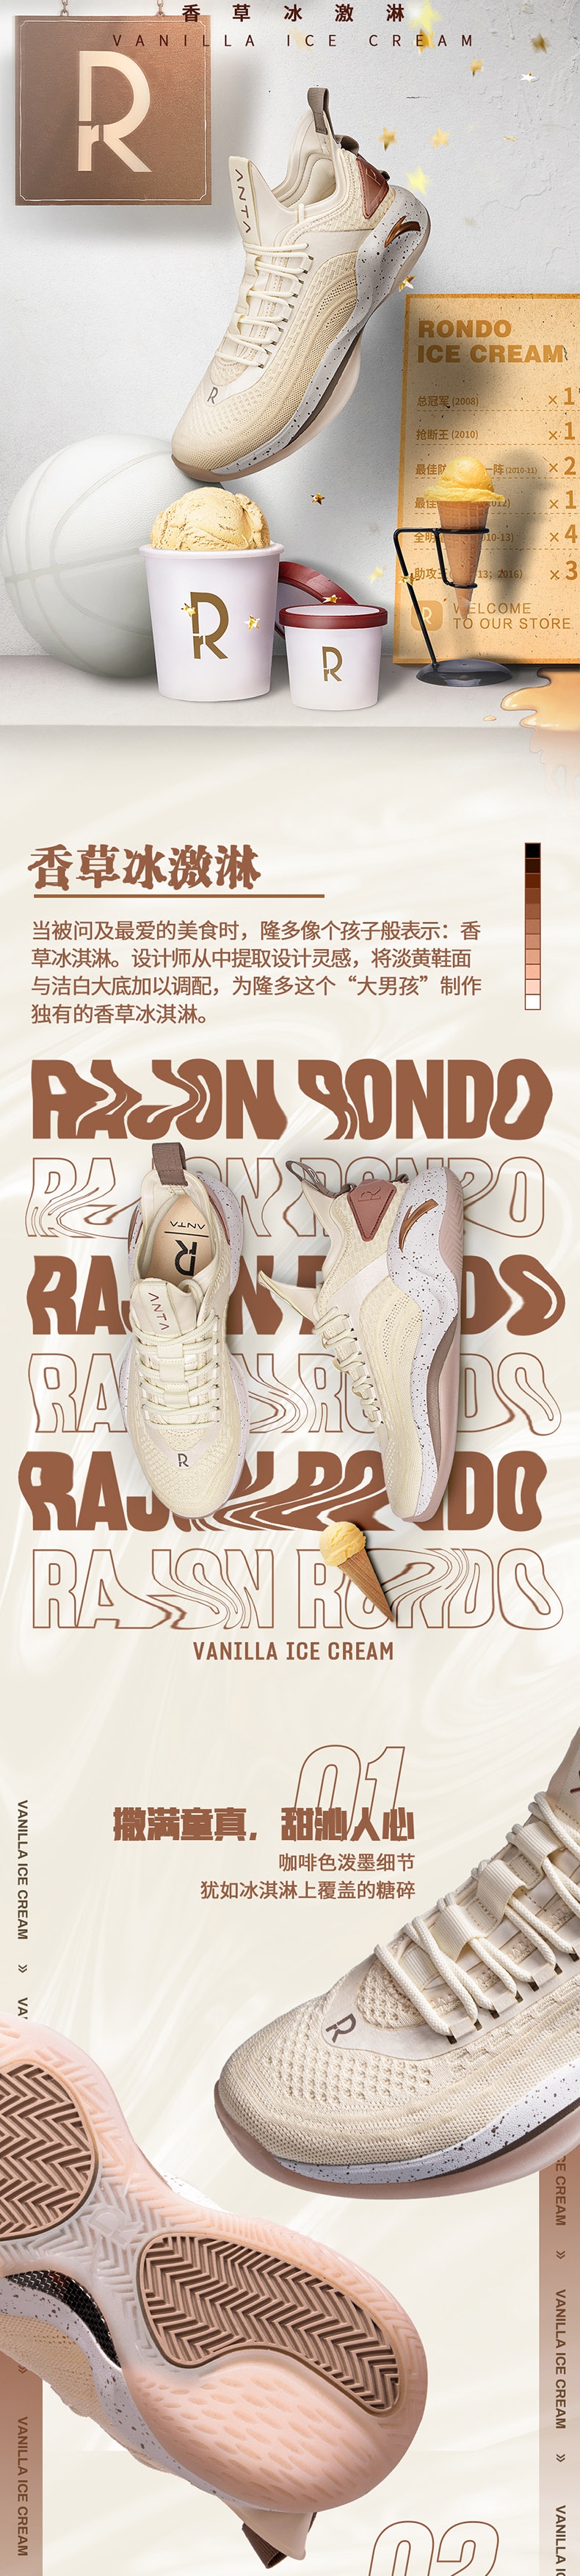 Anta RR6 Rajon Rondo 2020 "VANILLA ICE CREAM" Summer Low Basketball Shoes